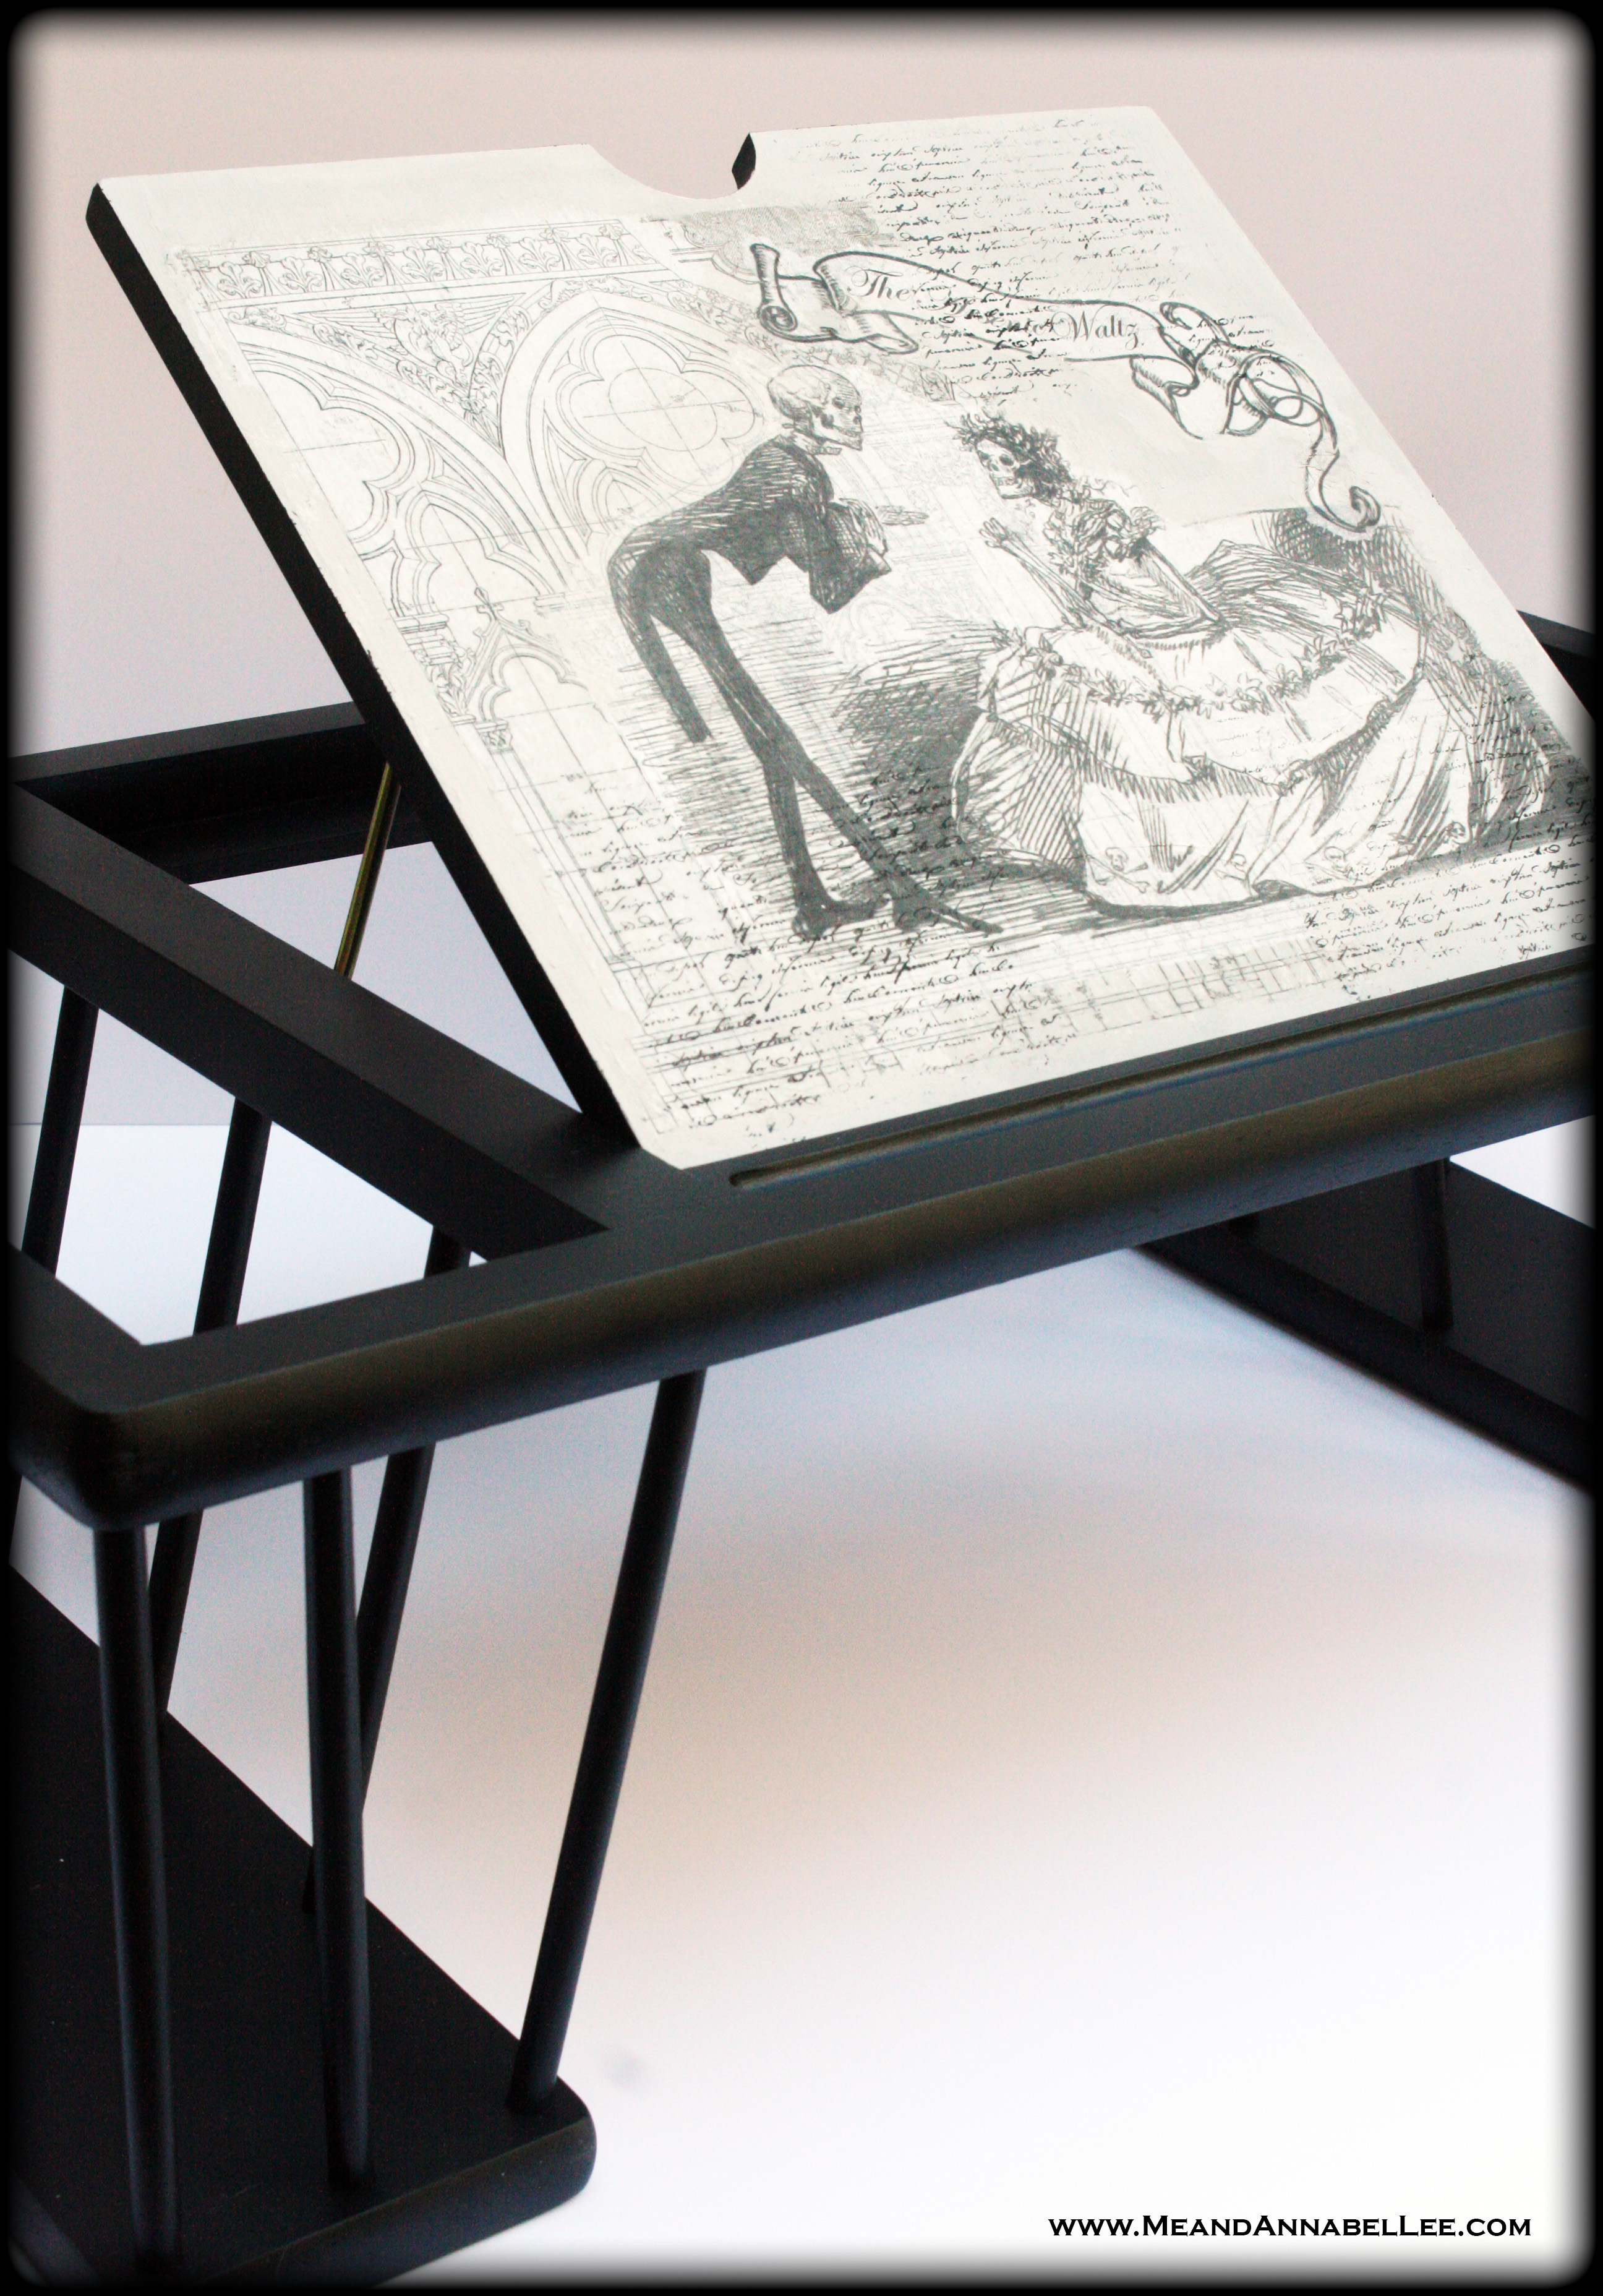 DIY Victorian Gothic Skeleton Lap Desk | Easel | Gothic Artwork Image transfer | www.MeandAnnabelLee.com